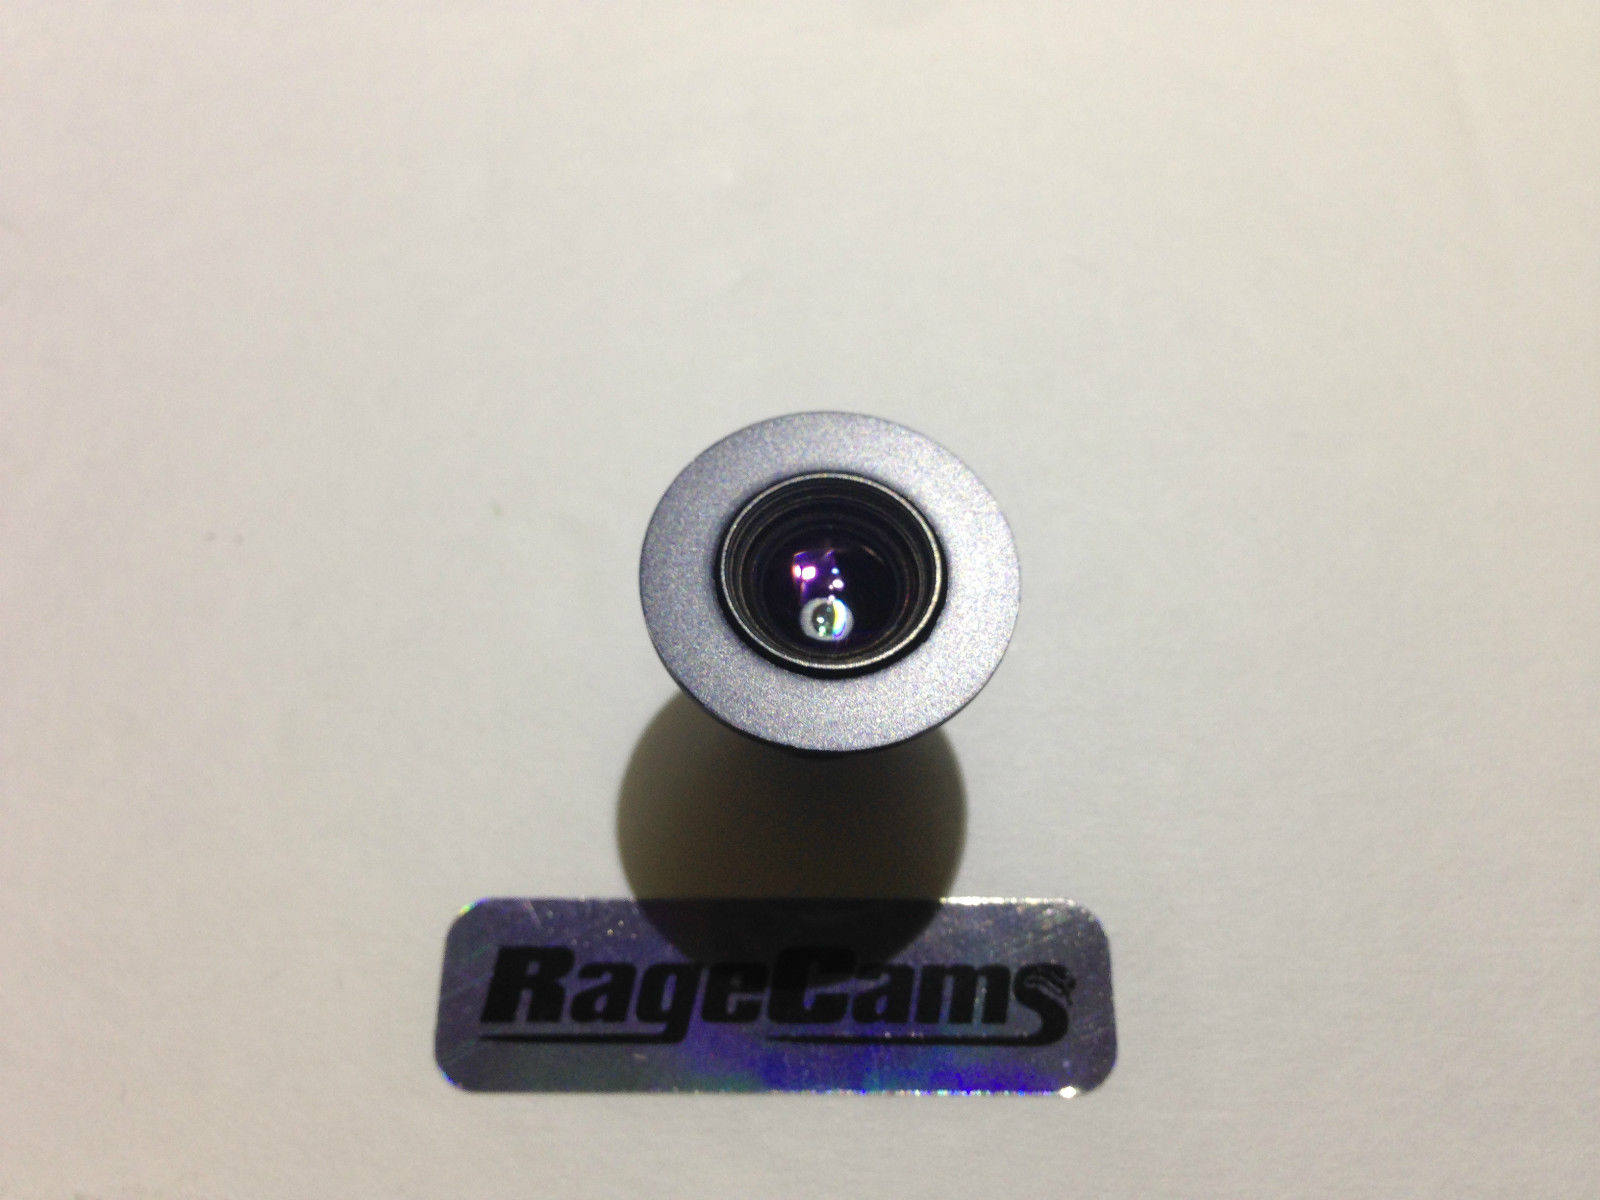 RageCams 25mm ContourRoam Plus 1-2-3 Tele-Photo Zoom Lens Kit